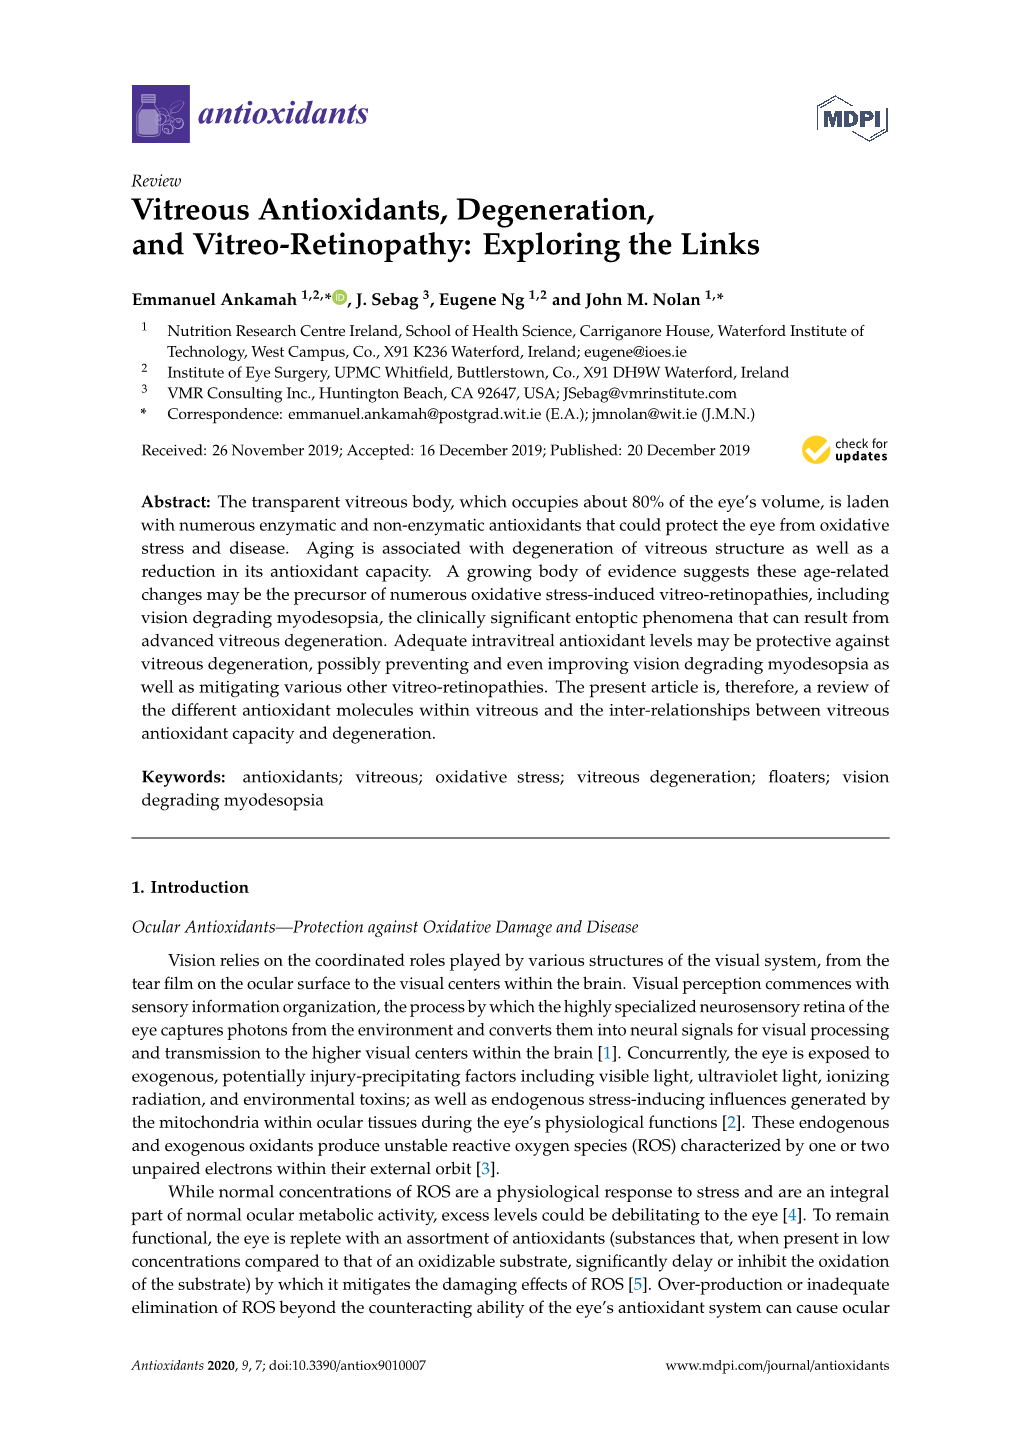 Vitreous Antioxidants, Degeneration, and Vitreo-Retinopathy: Exploring the Links